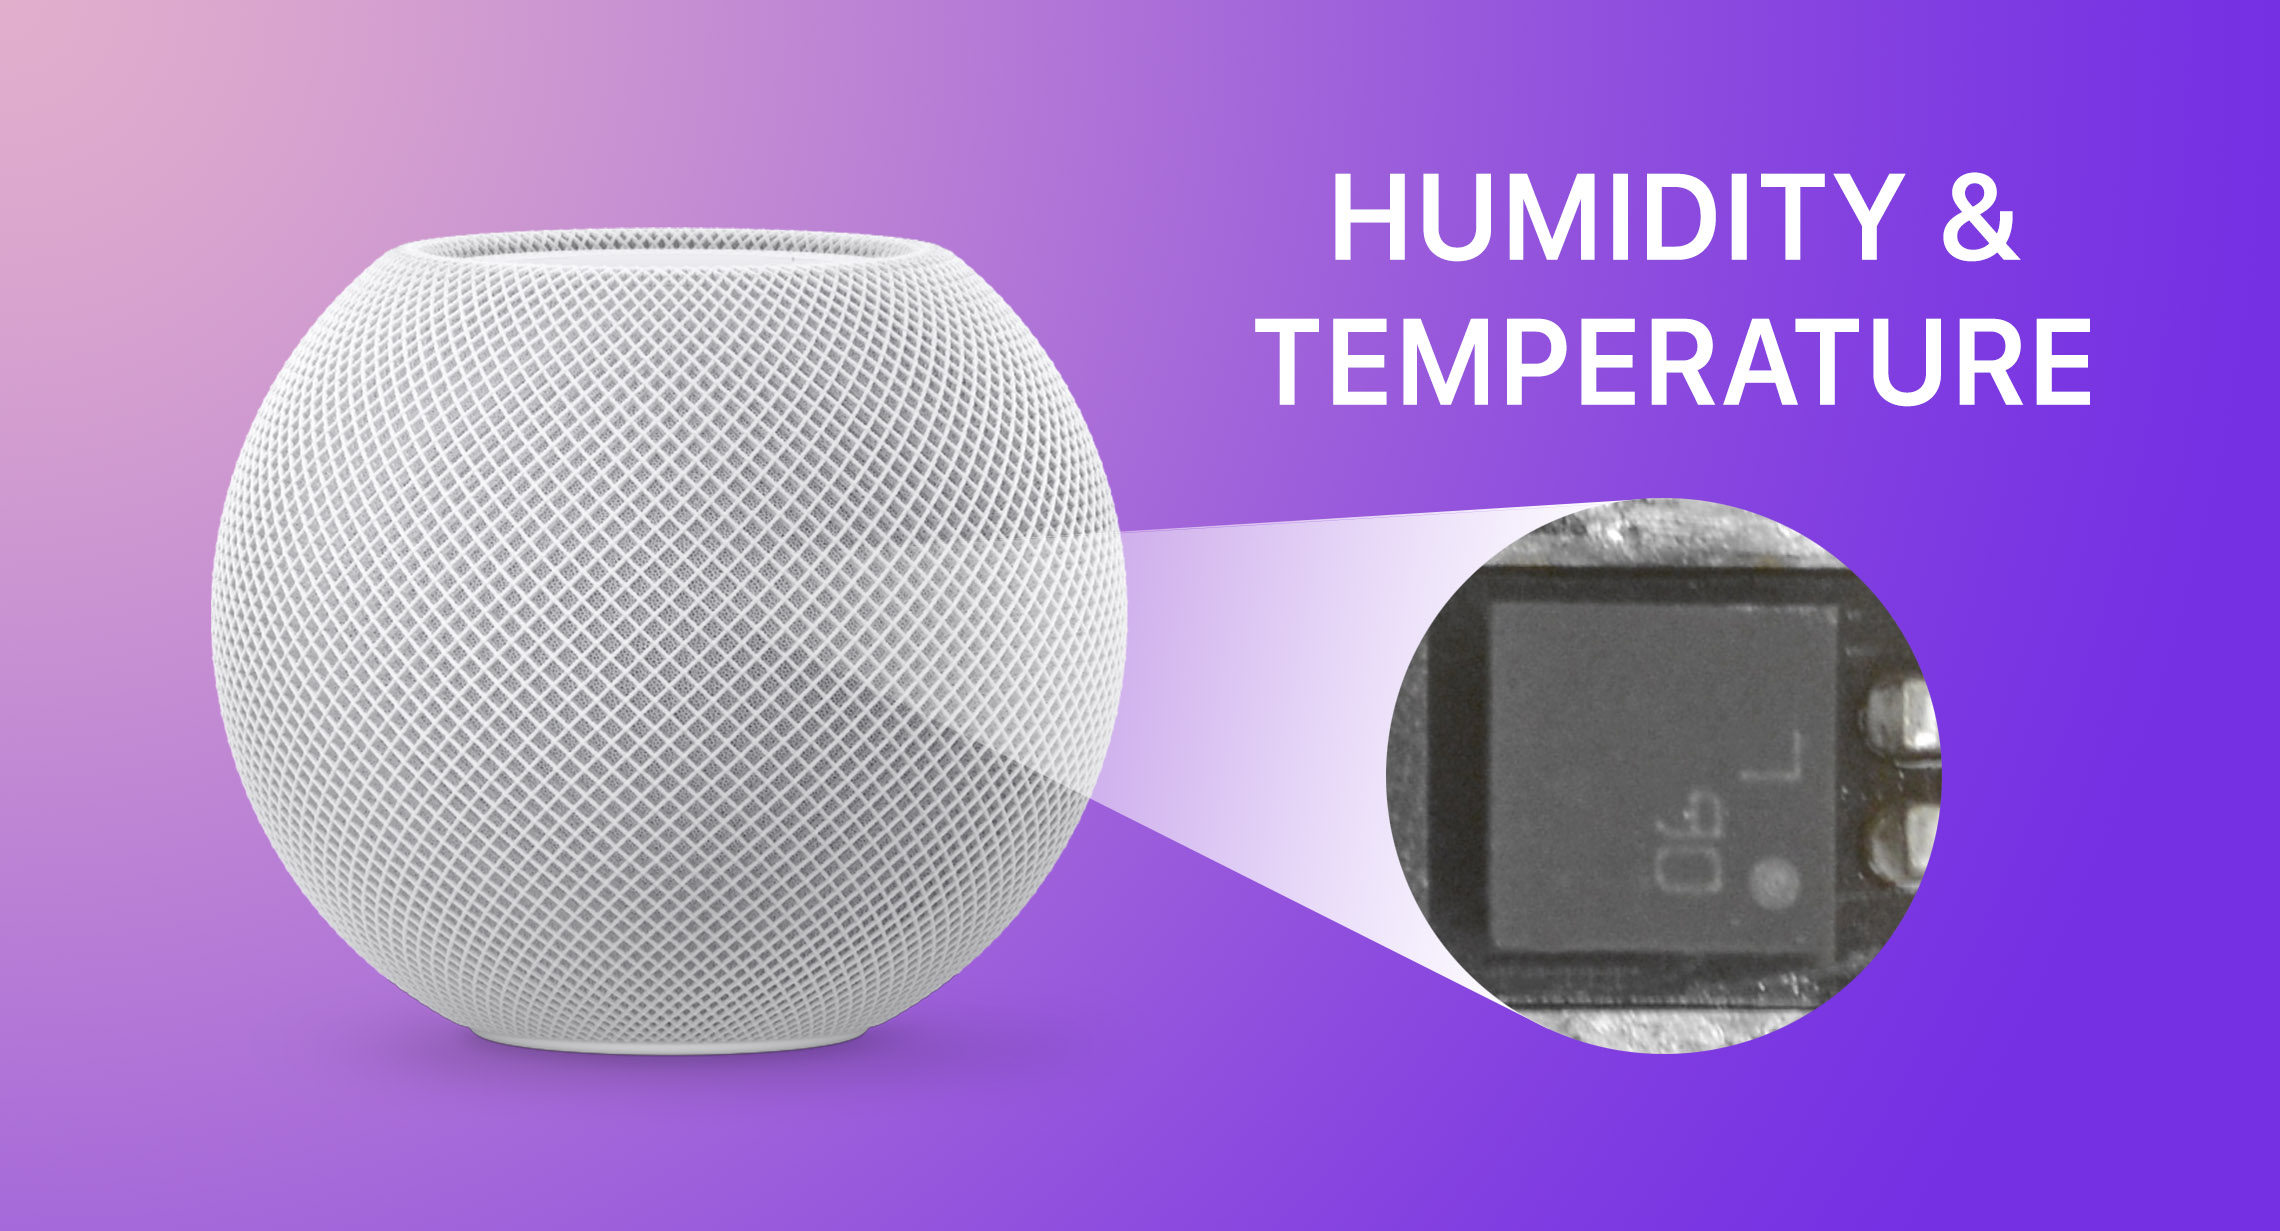 HomePod mini humiditytemperature feature - نحوه استفاده از سنسورهای دما و رطوبت در HomePod و HomePod Mini